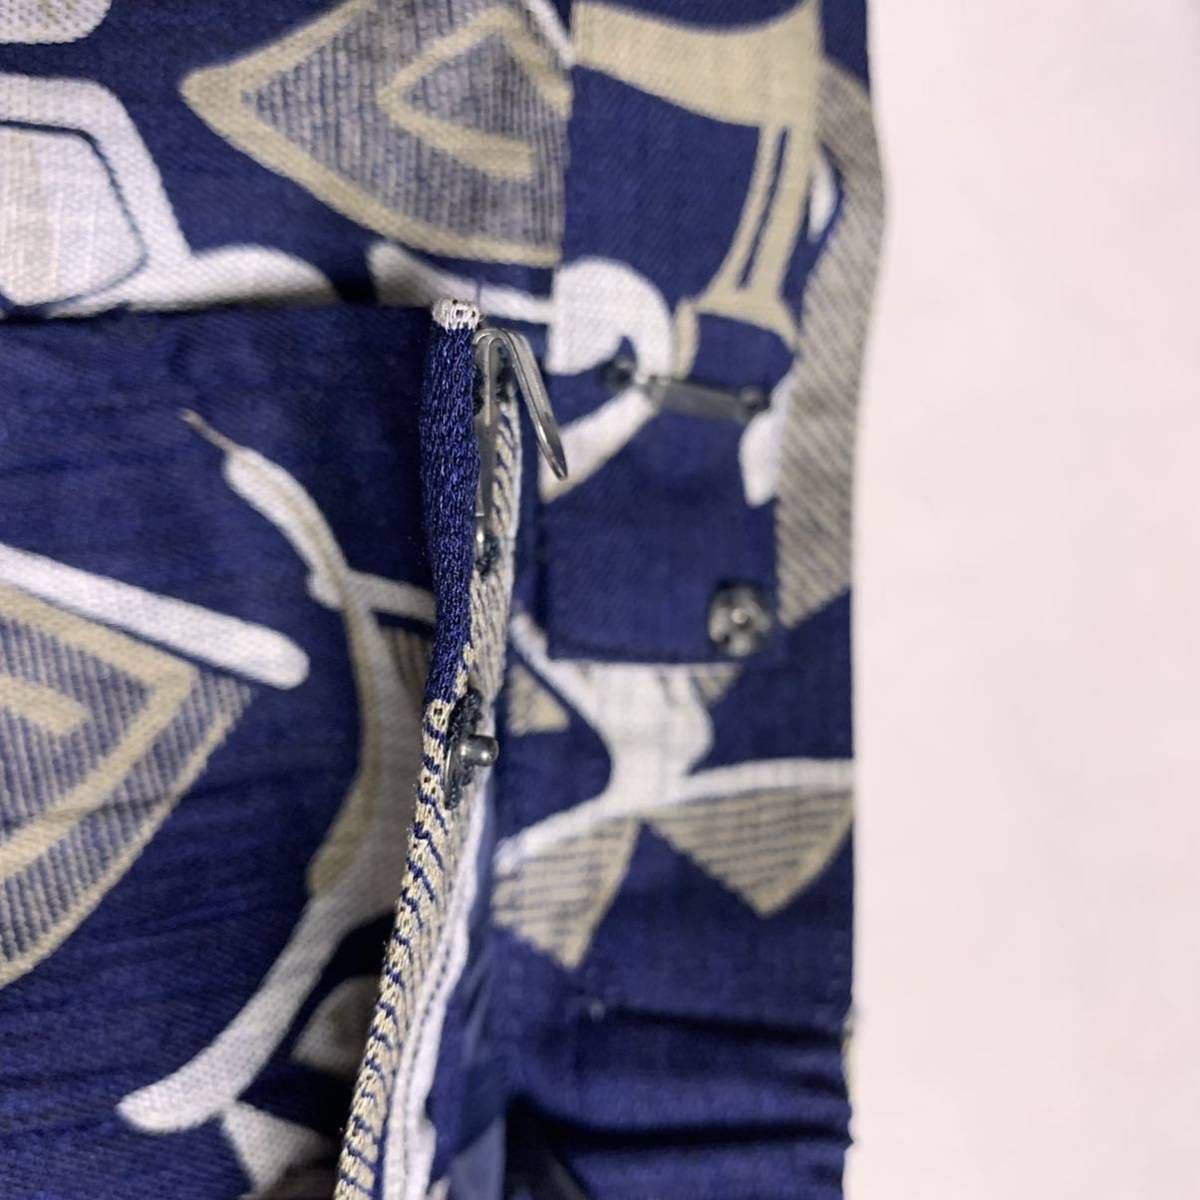 SOFT LADY short sleeves blouse skirt total pattern art pattern navy blue navy grey gray 